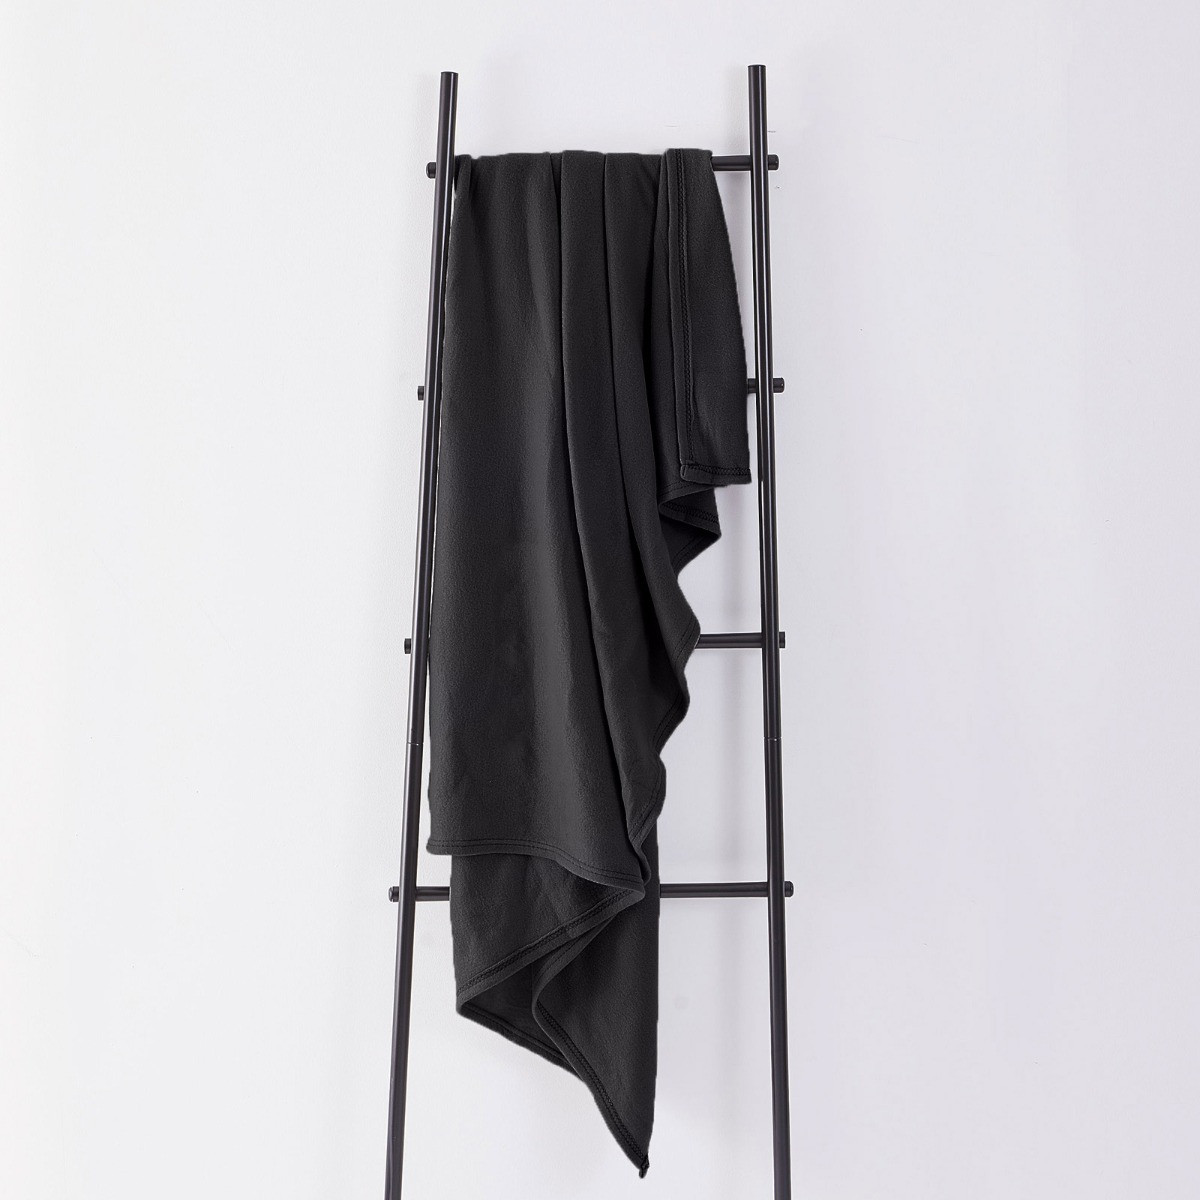 Dreamscene by OHS Fleece Throw Blanket, Black - 120 x 150cm>